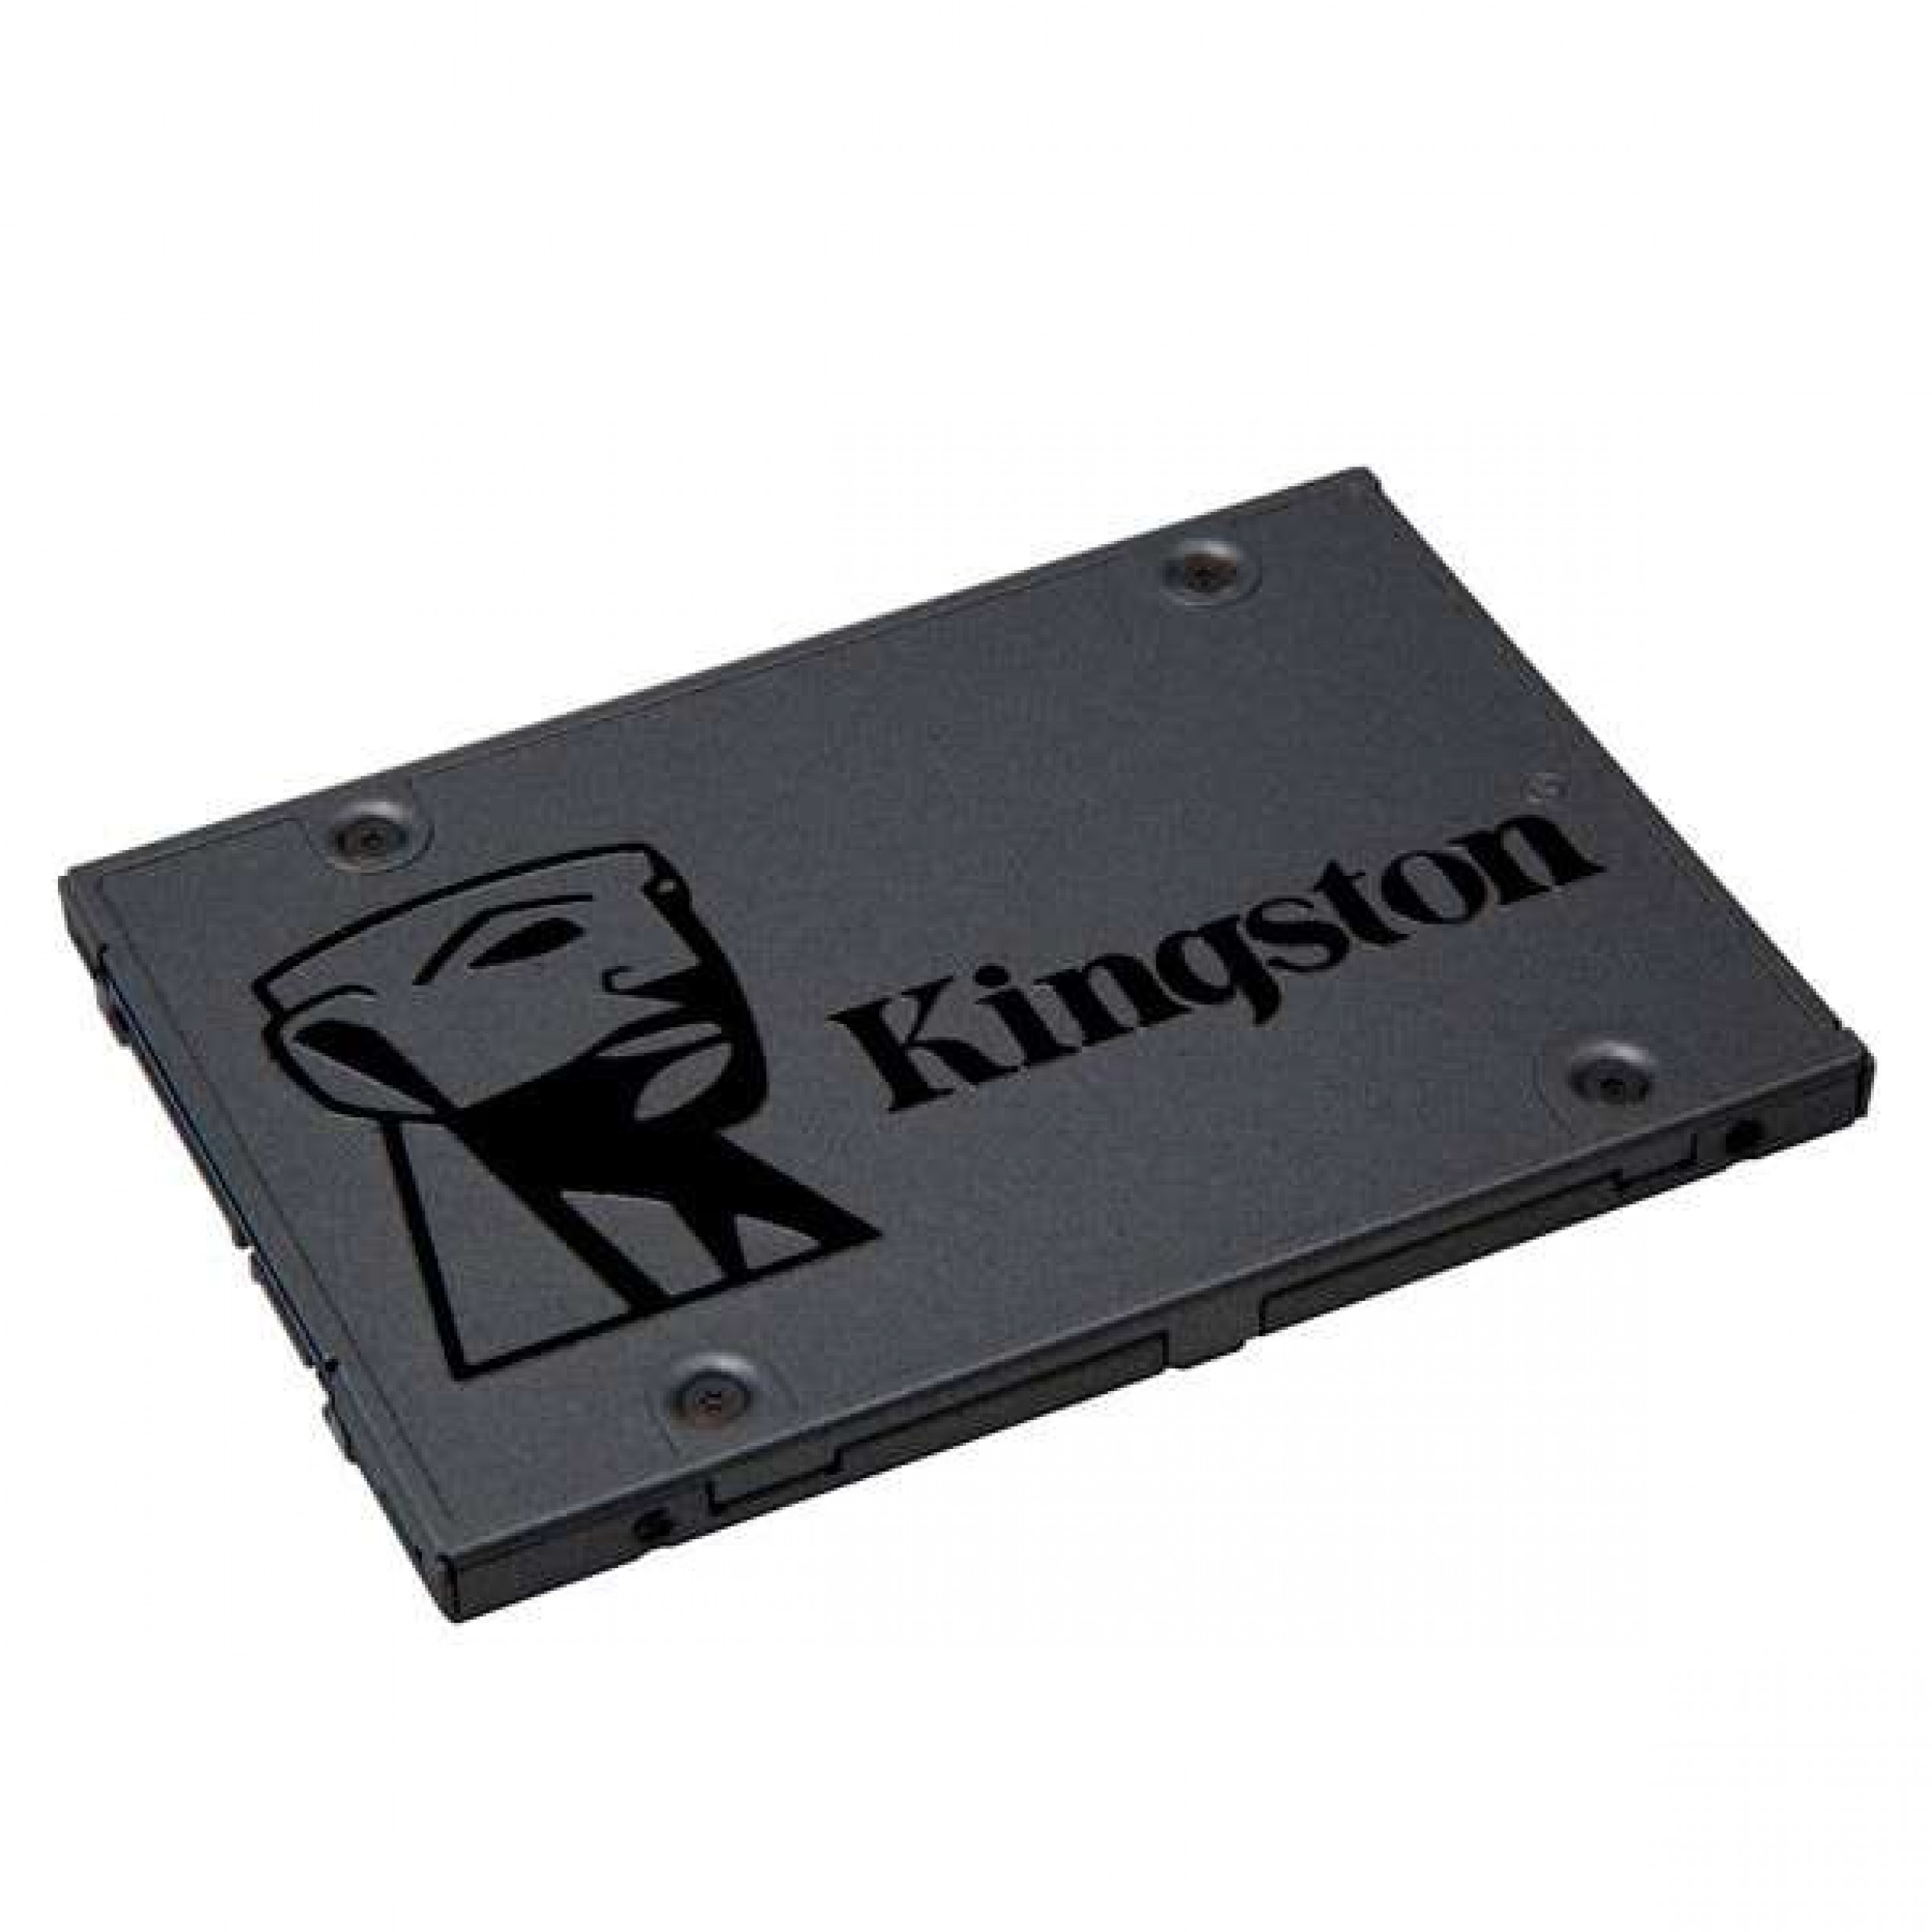 KINGSTON 120 GB A400 SSDNow SA400S37/120G 2.5" SATA 3.0 SSD